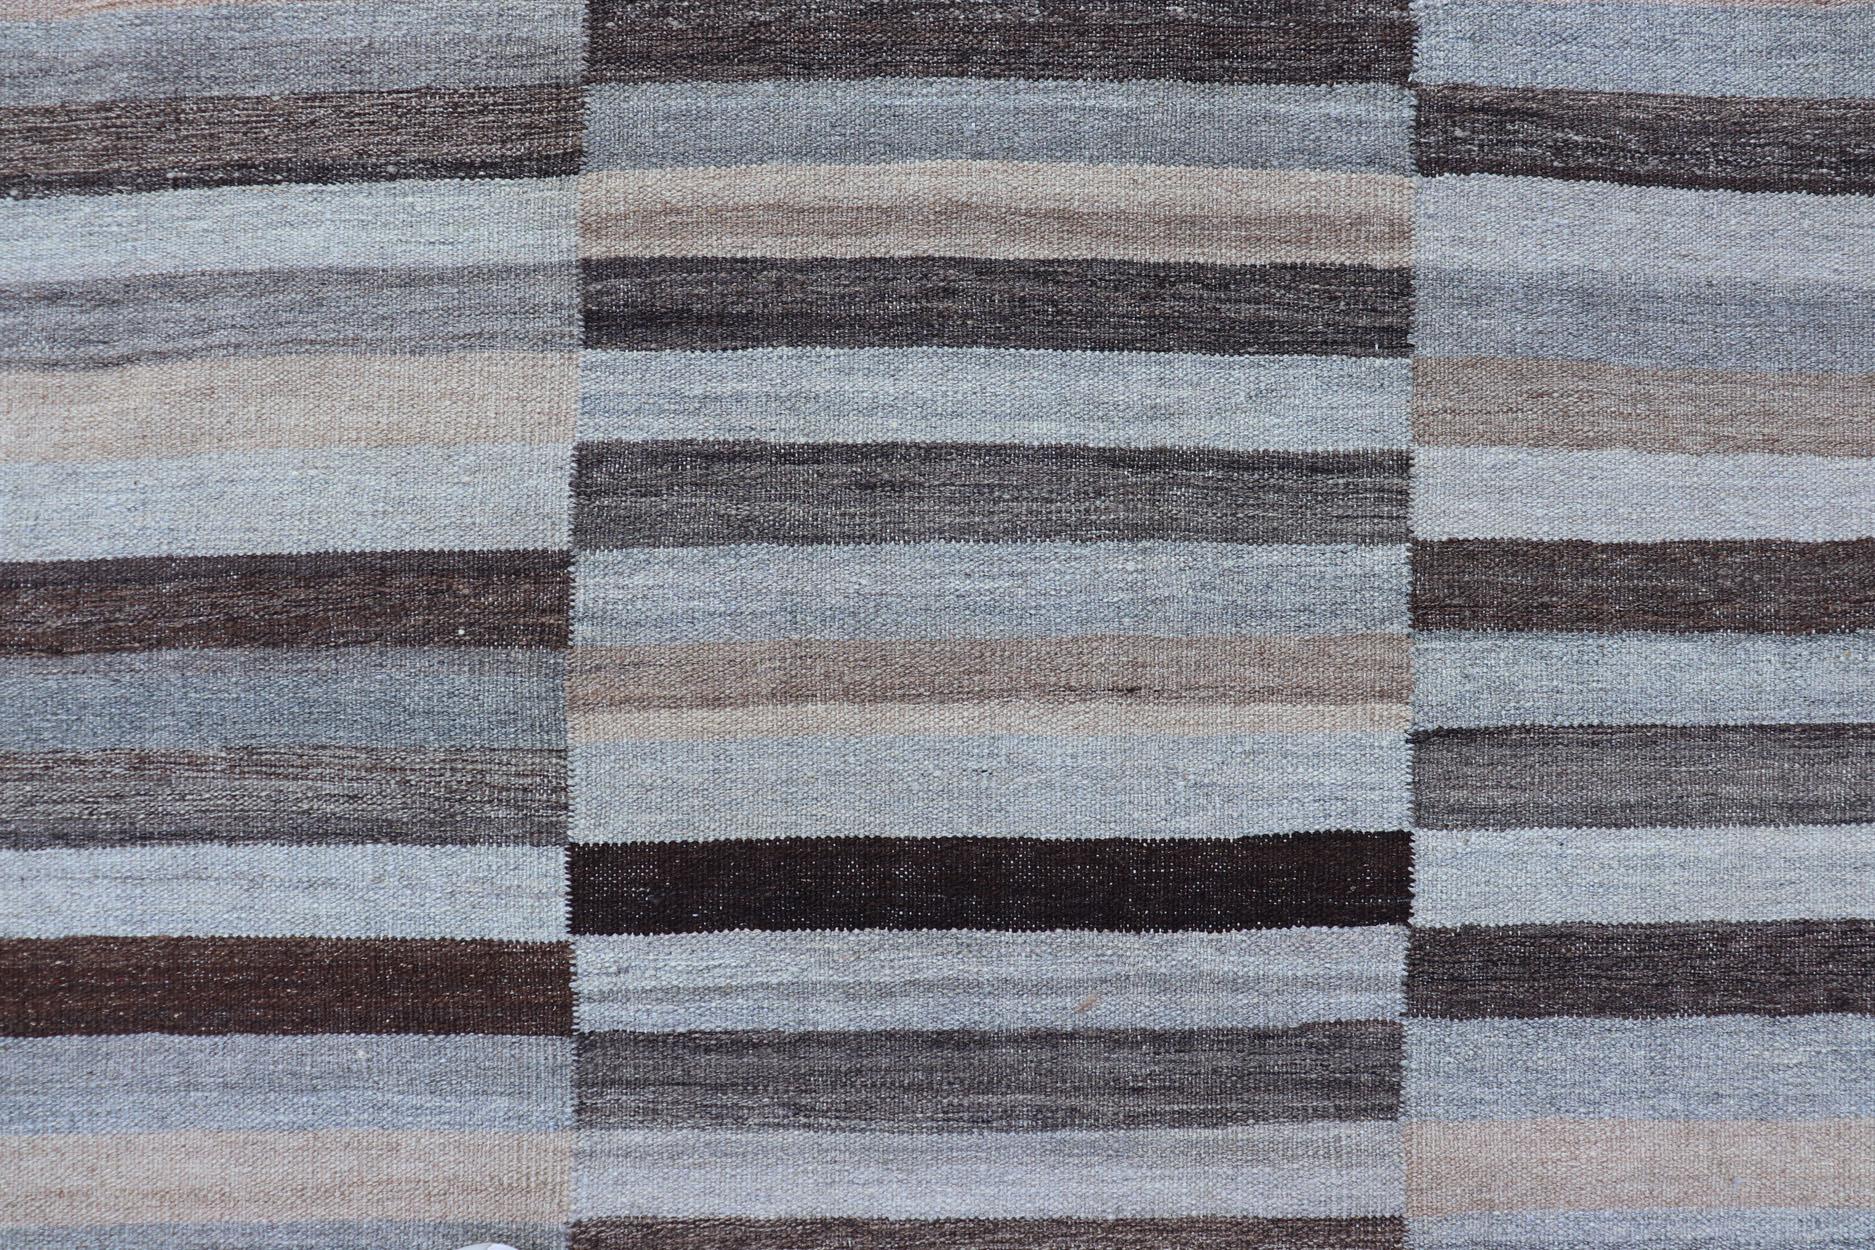 Modern Flat-Weave Kilim Rug in Multi-Panel Striped Design in Earthy Tones In New Condition For Sale In Atlanta, GA